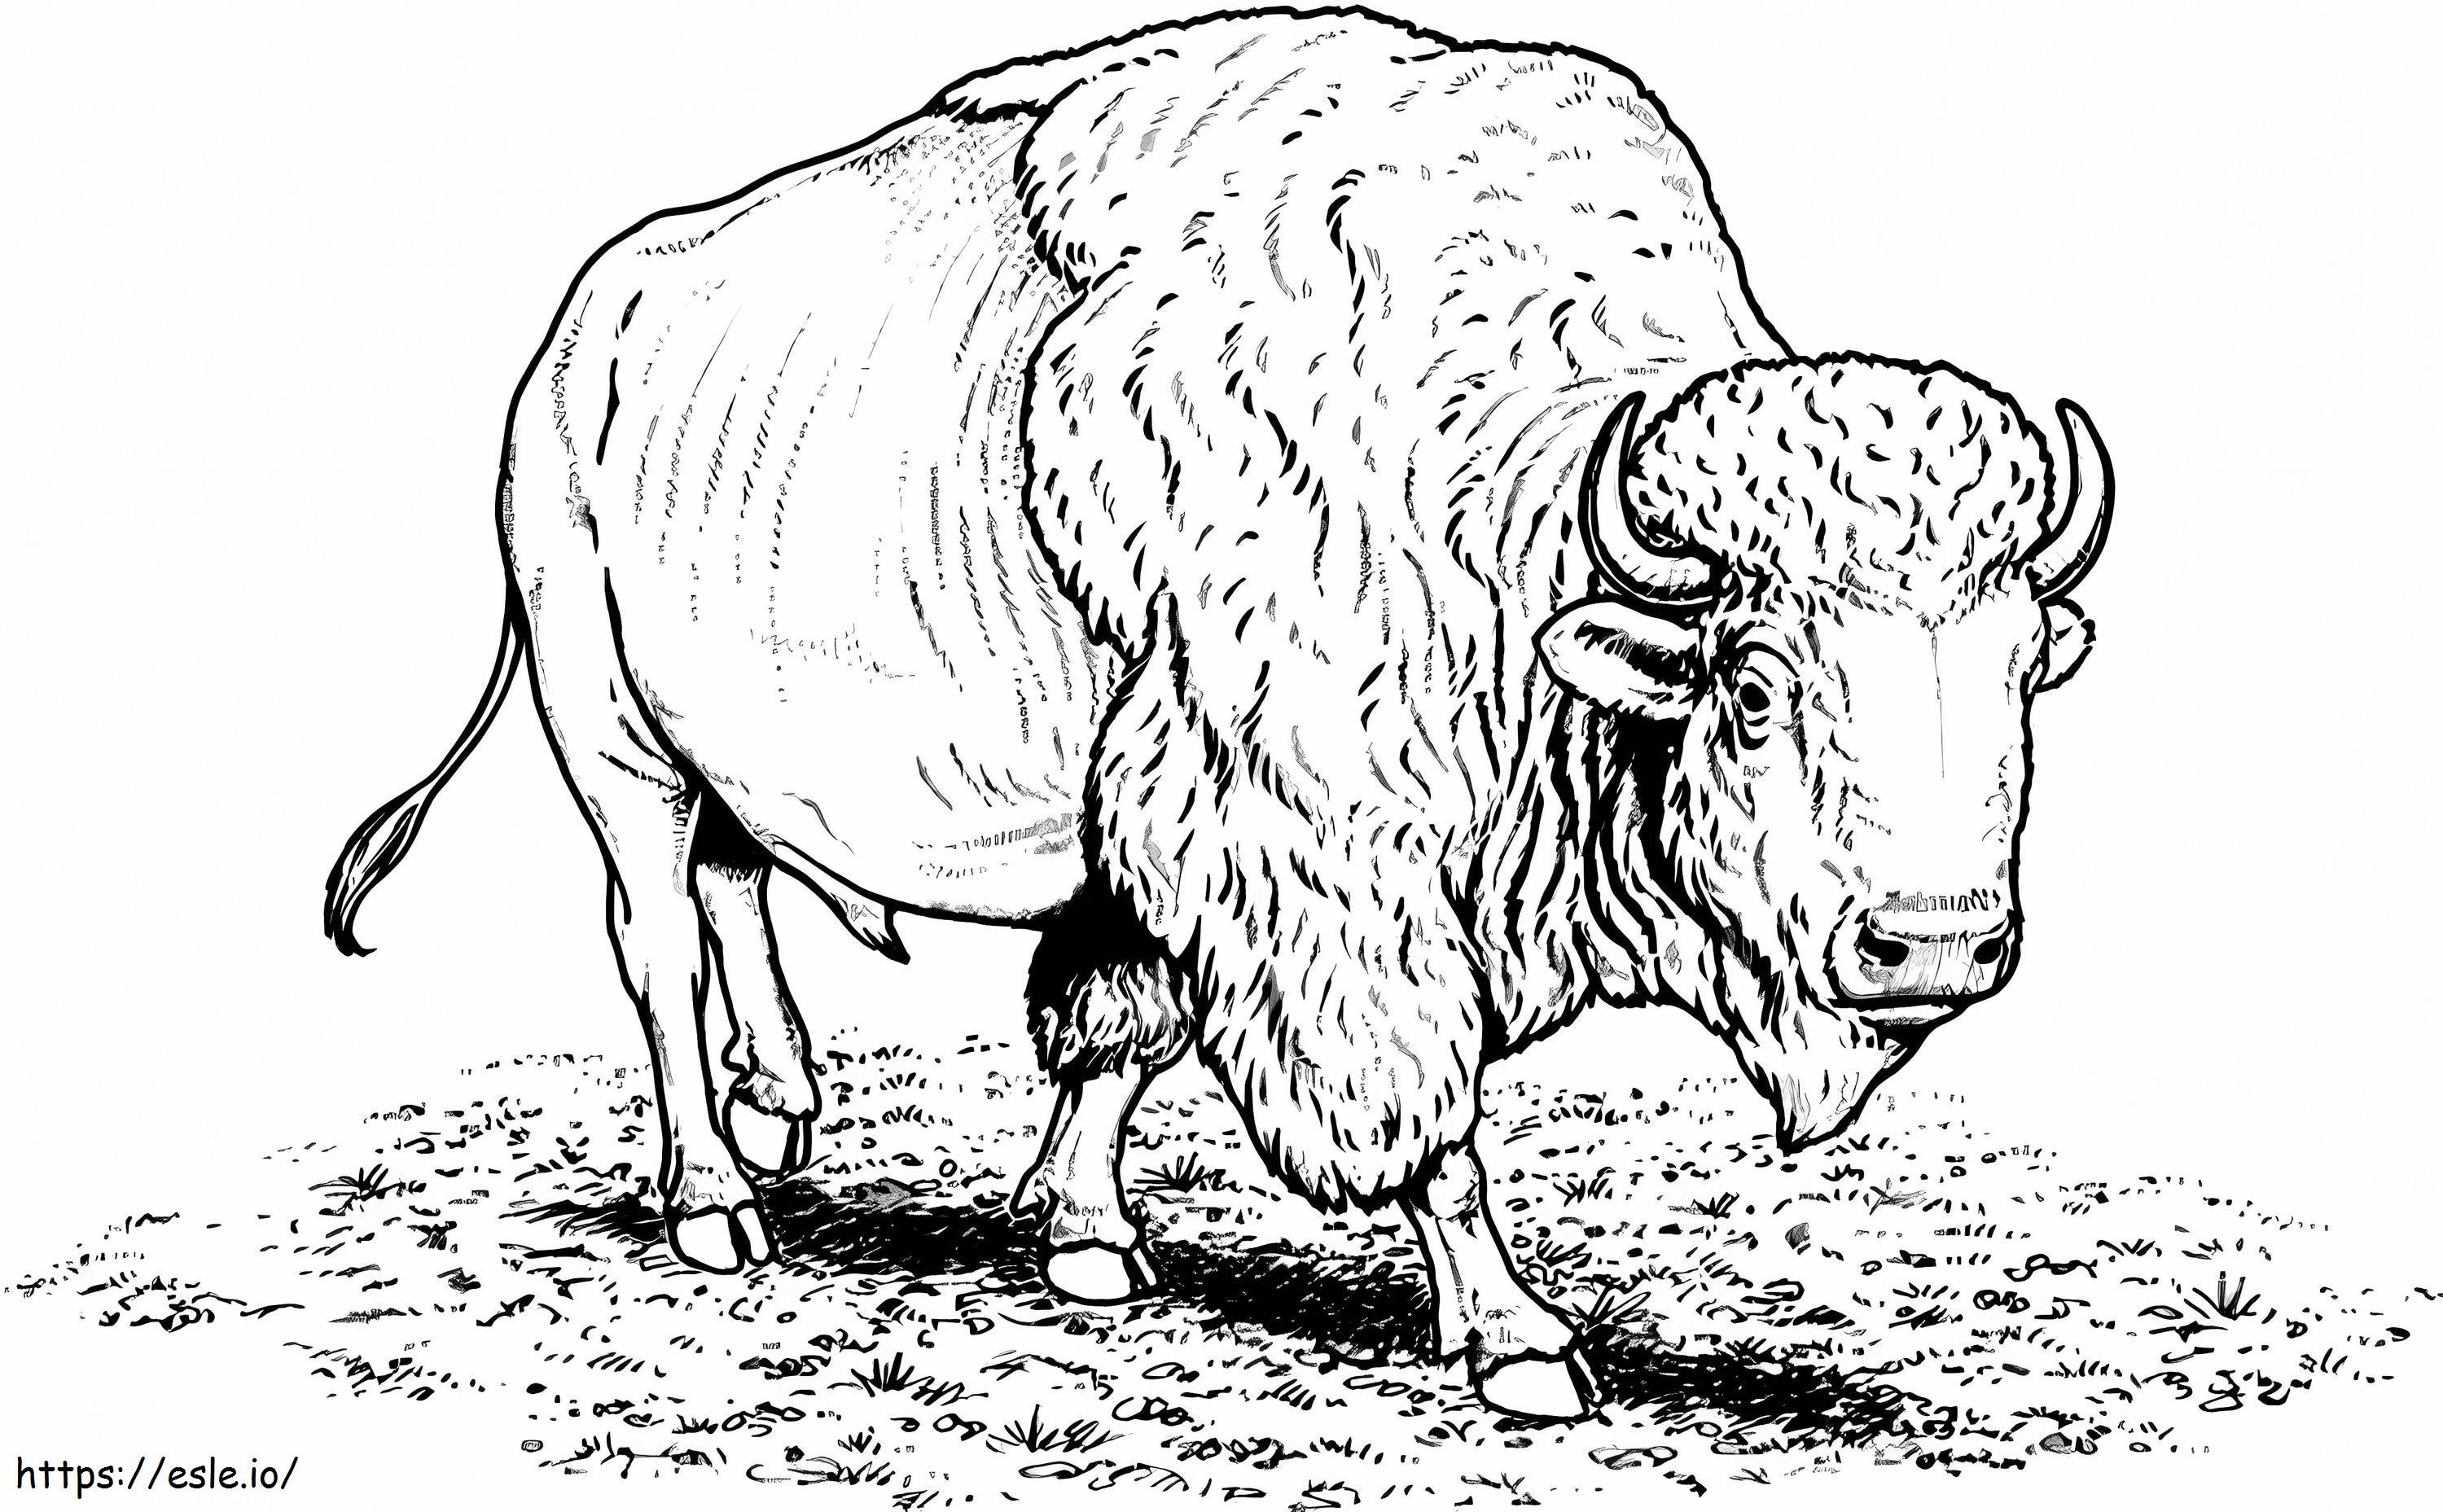 Basic Buffalo coloring page